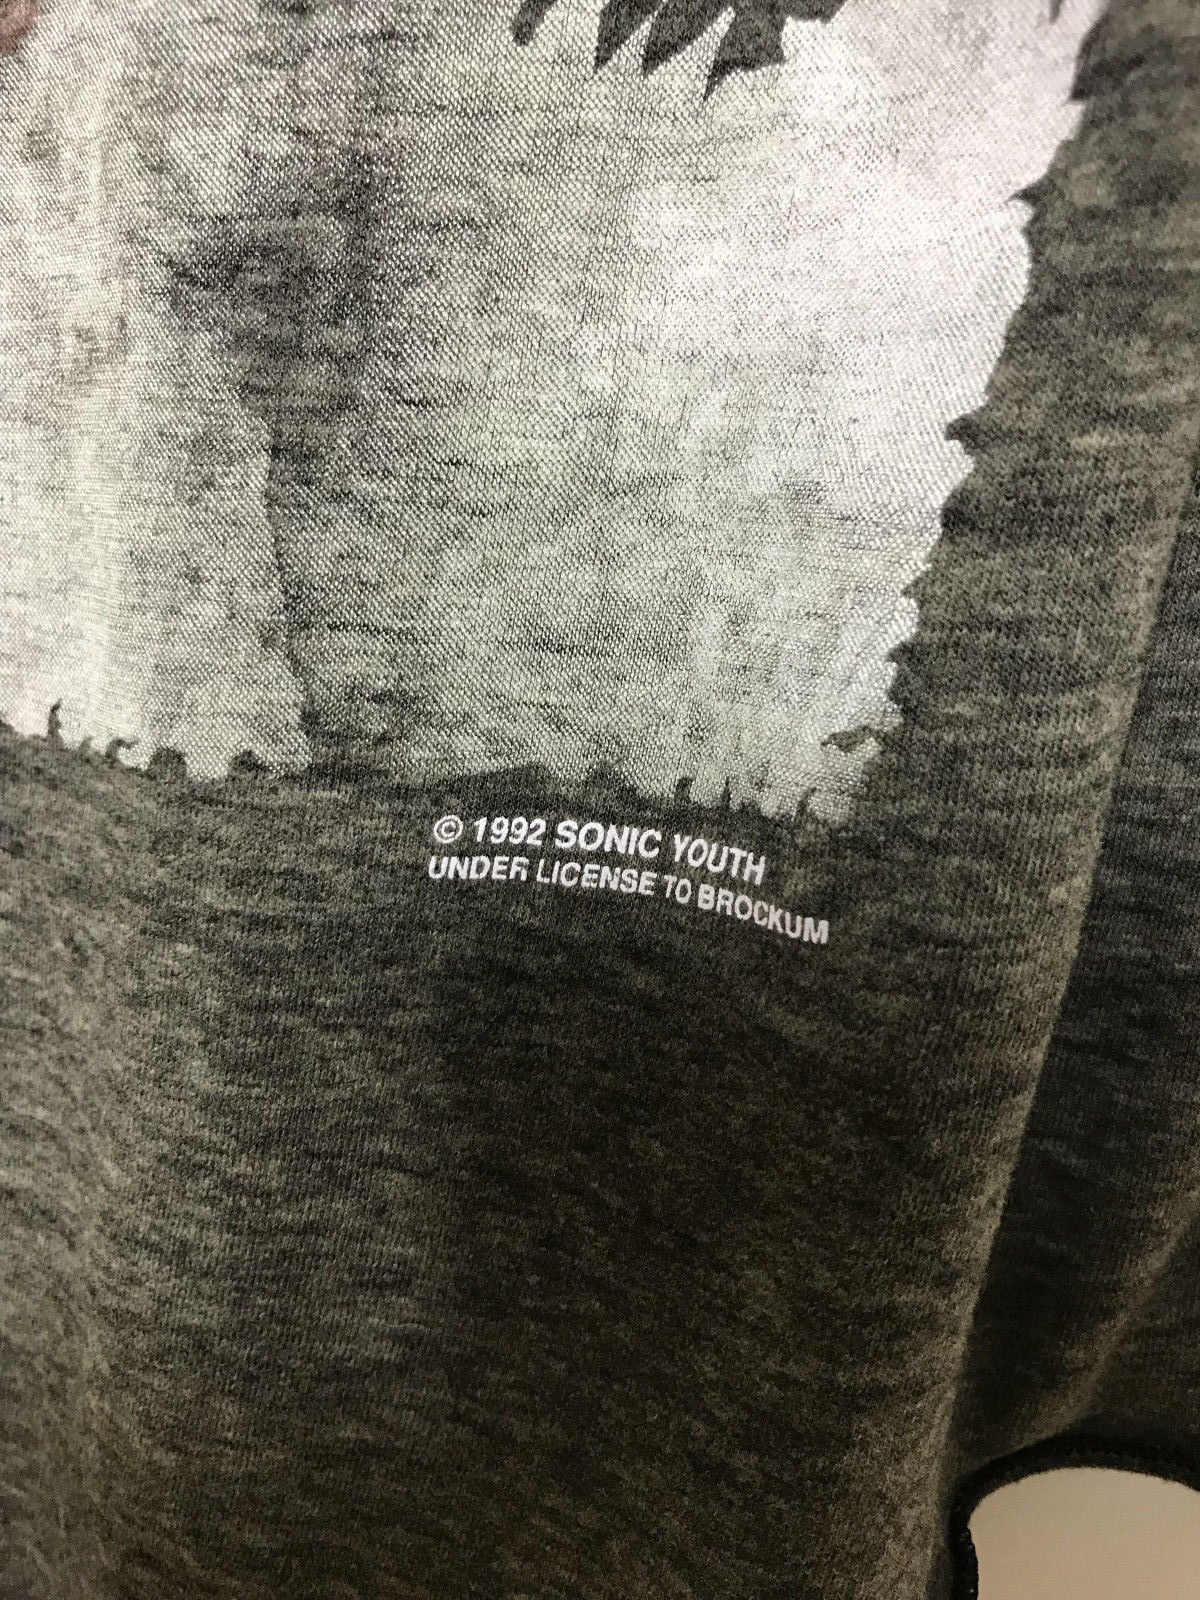 Sonic Youth 1992 Gracias Vintage 3/4 Sleeve T-Shirt